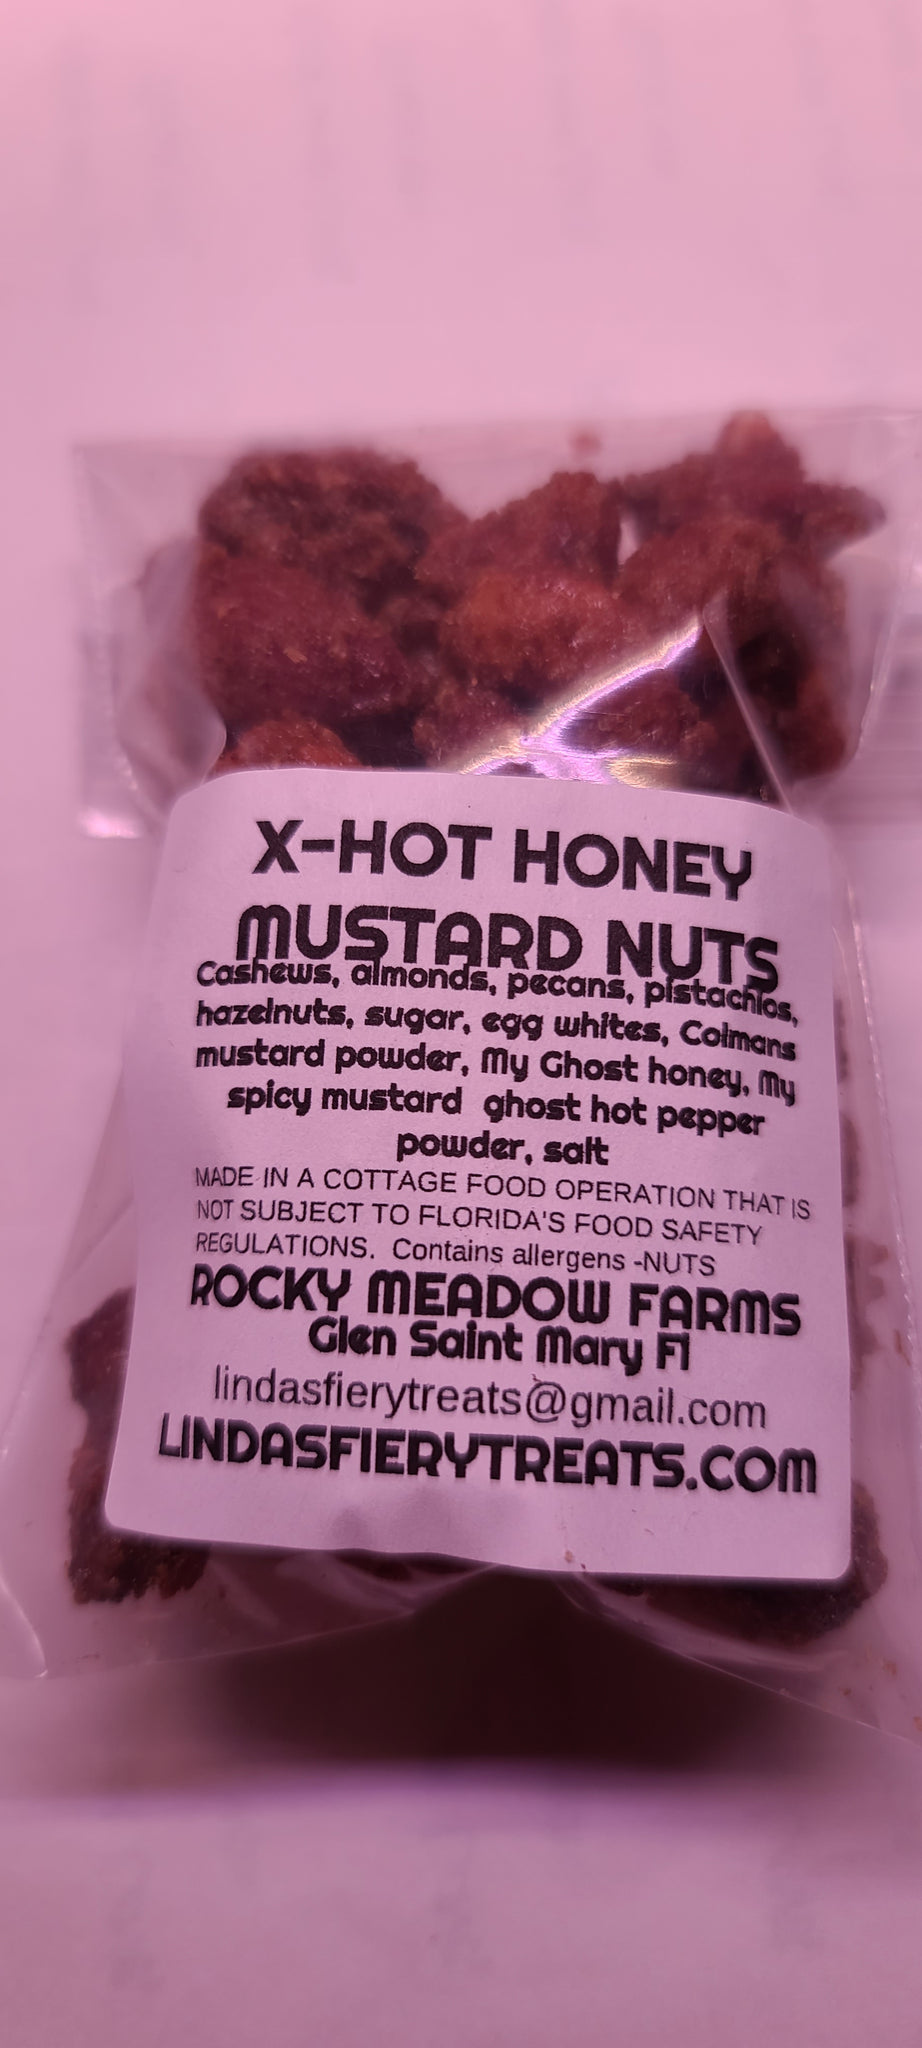 NUTS - XX-Hot Honey mustard mixed nuts